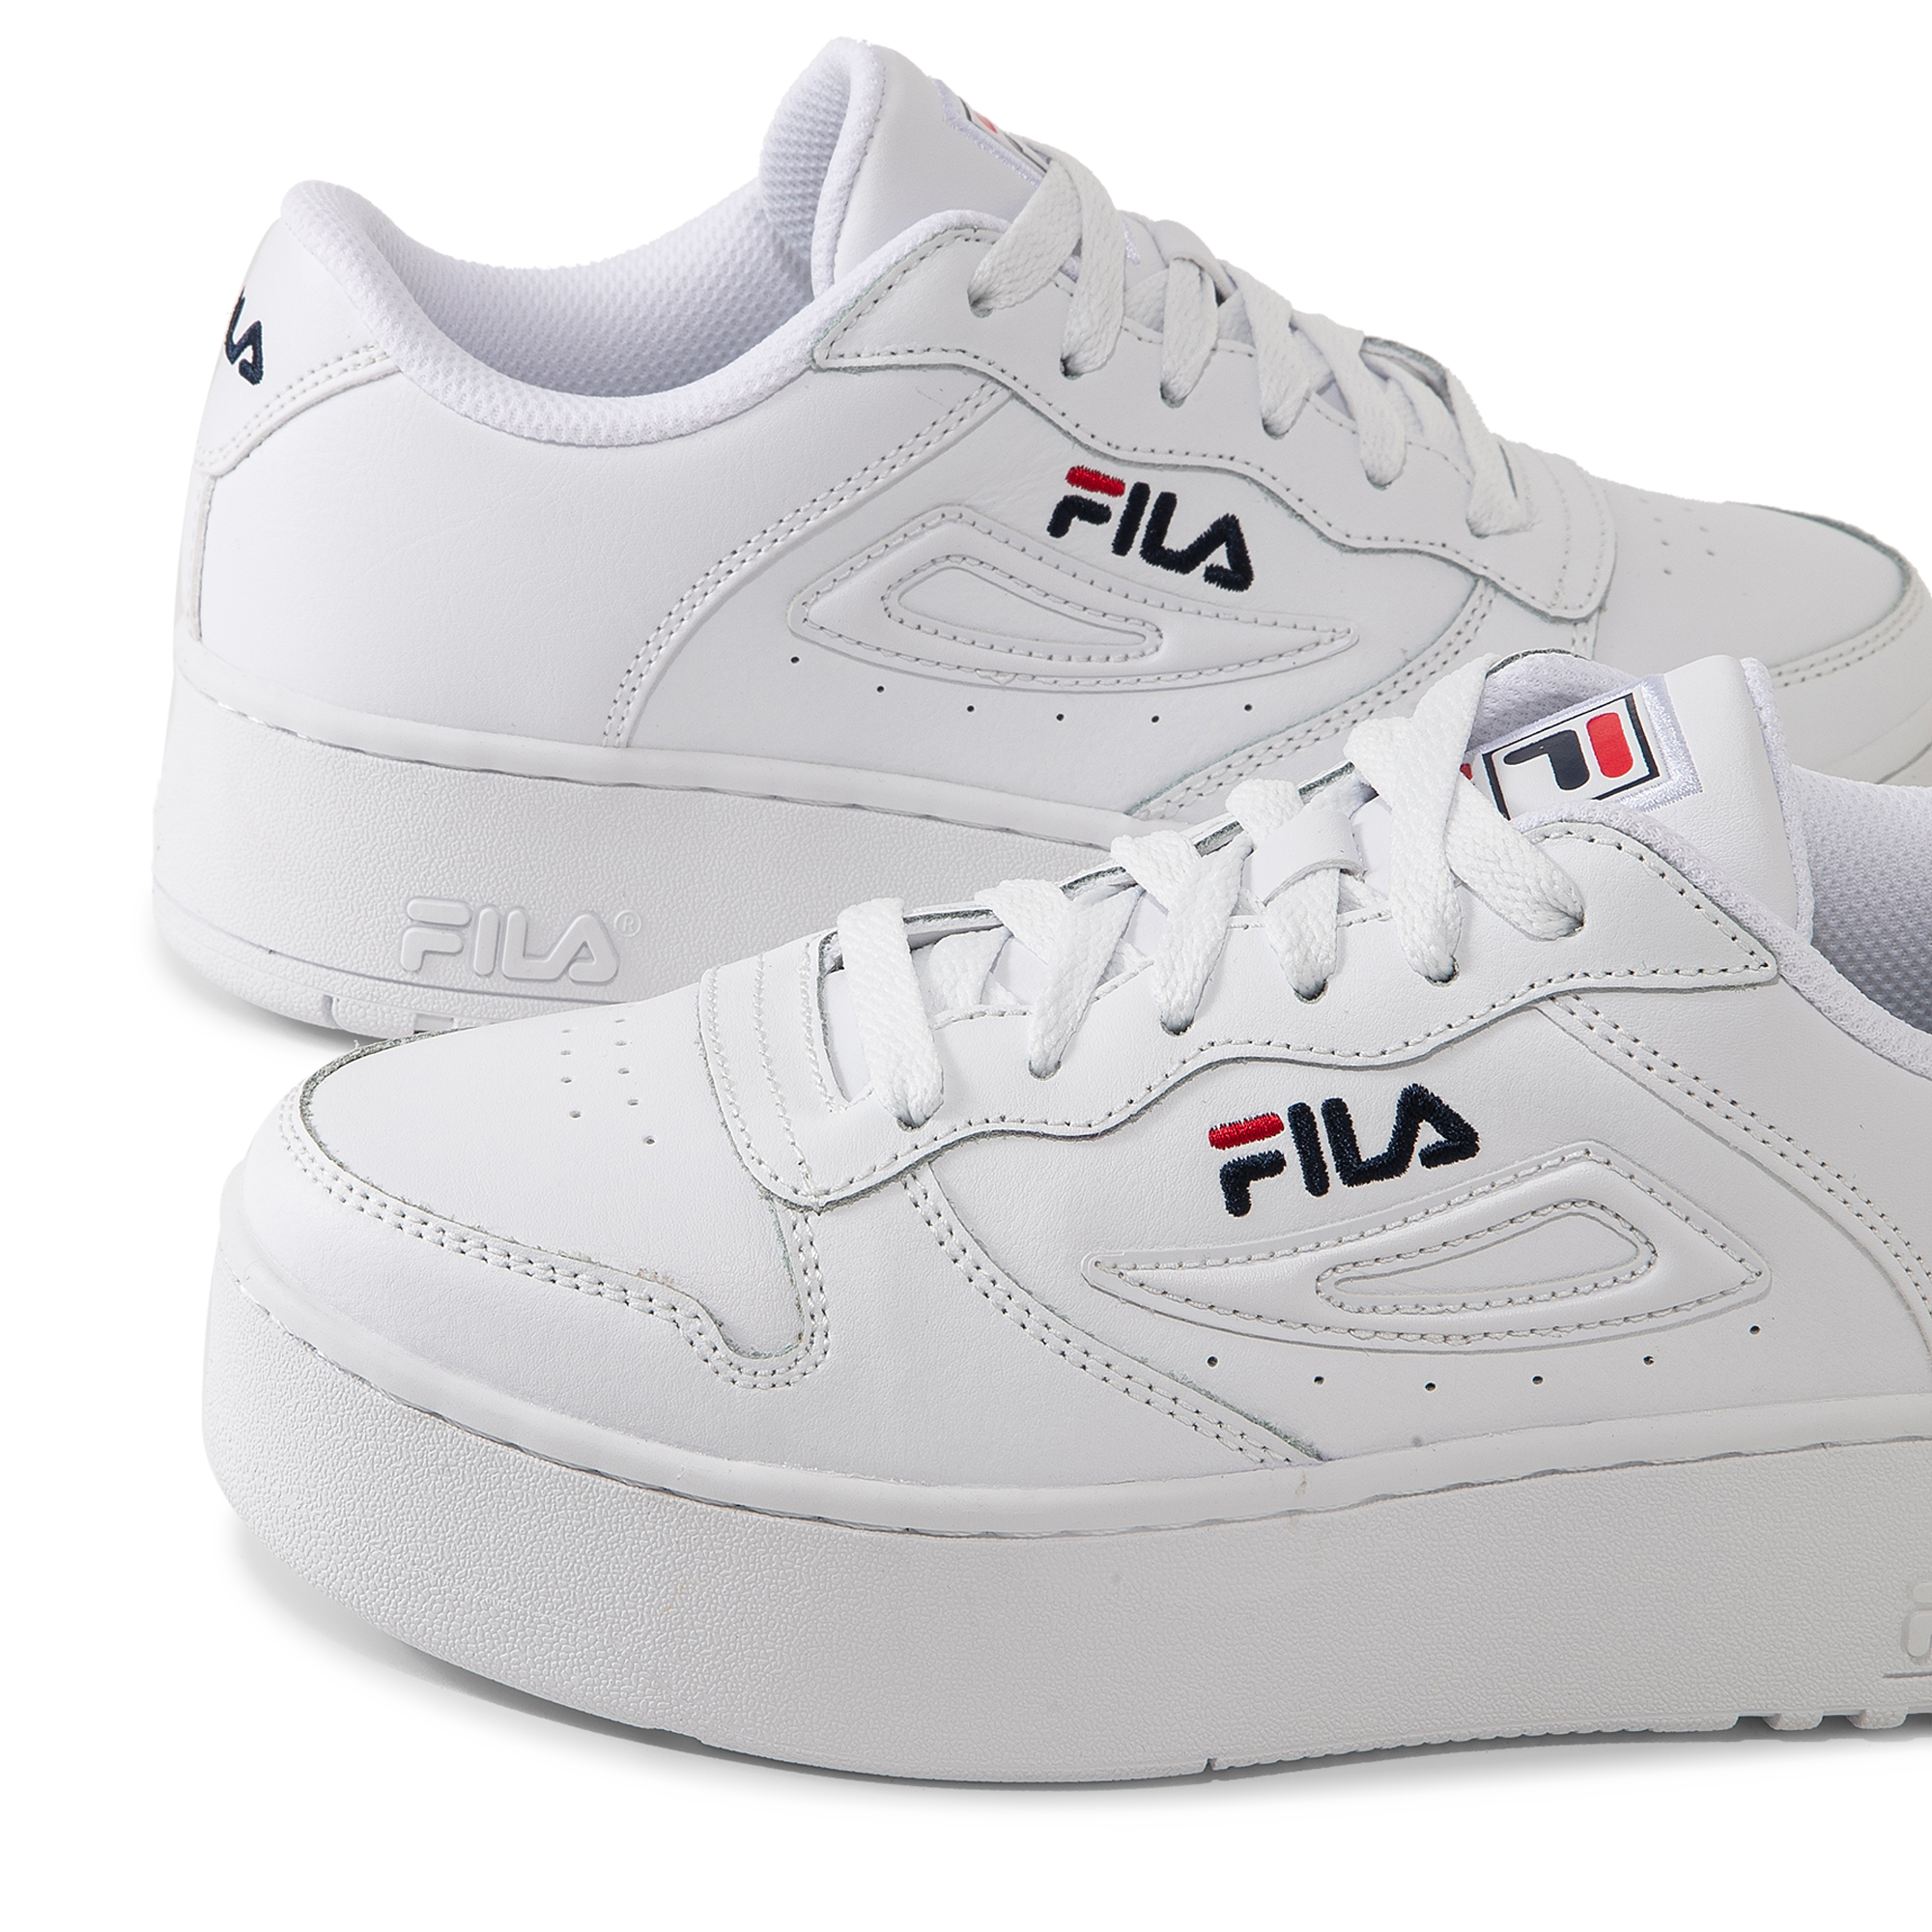 Fila FX 115 DSX sneakers for Women - White in KSA | Level Shoes